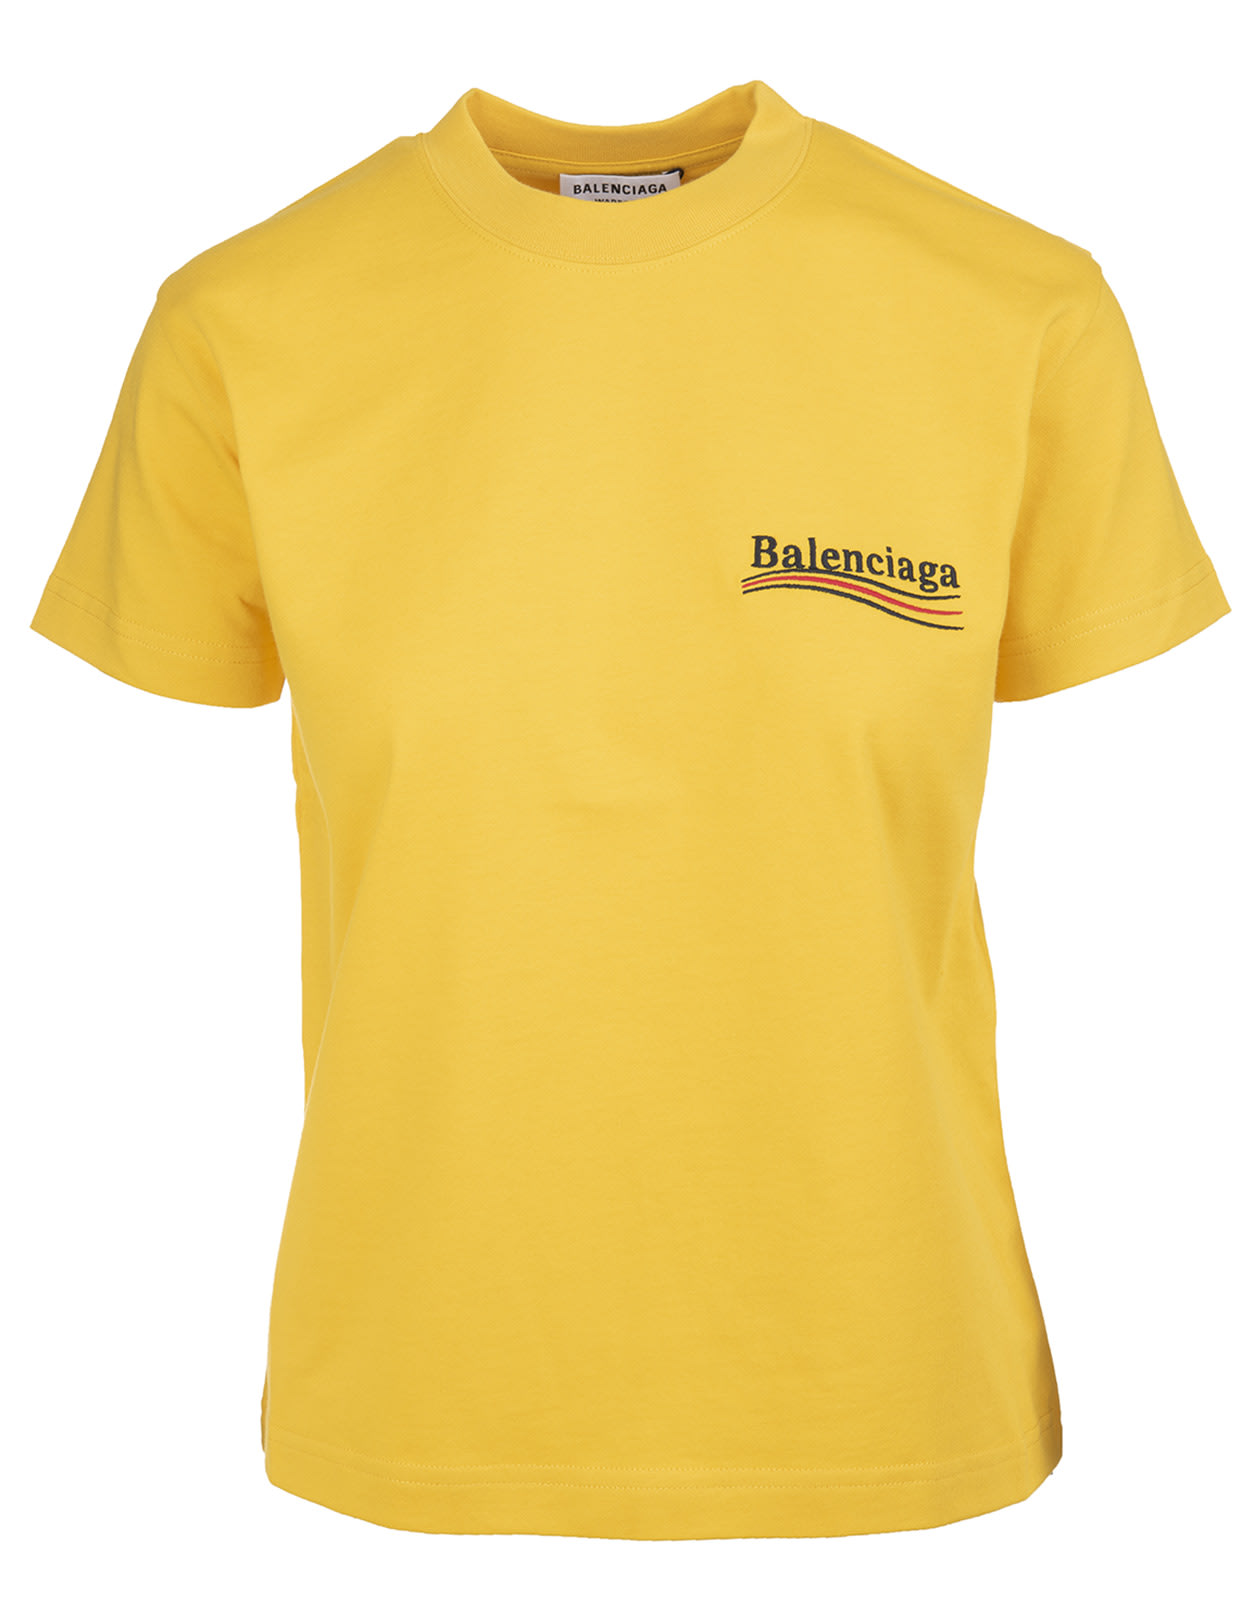 Balenciaga Woman Yellow Slim Fit Political Campaign T-shirt